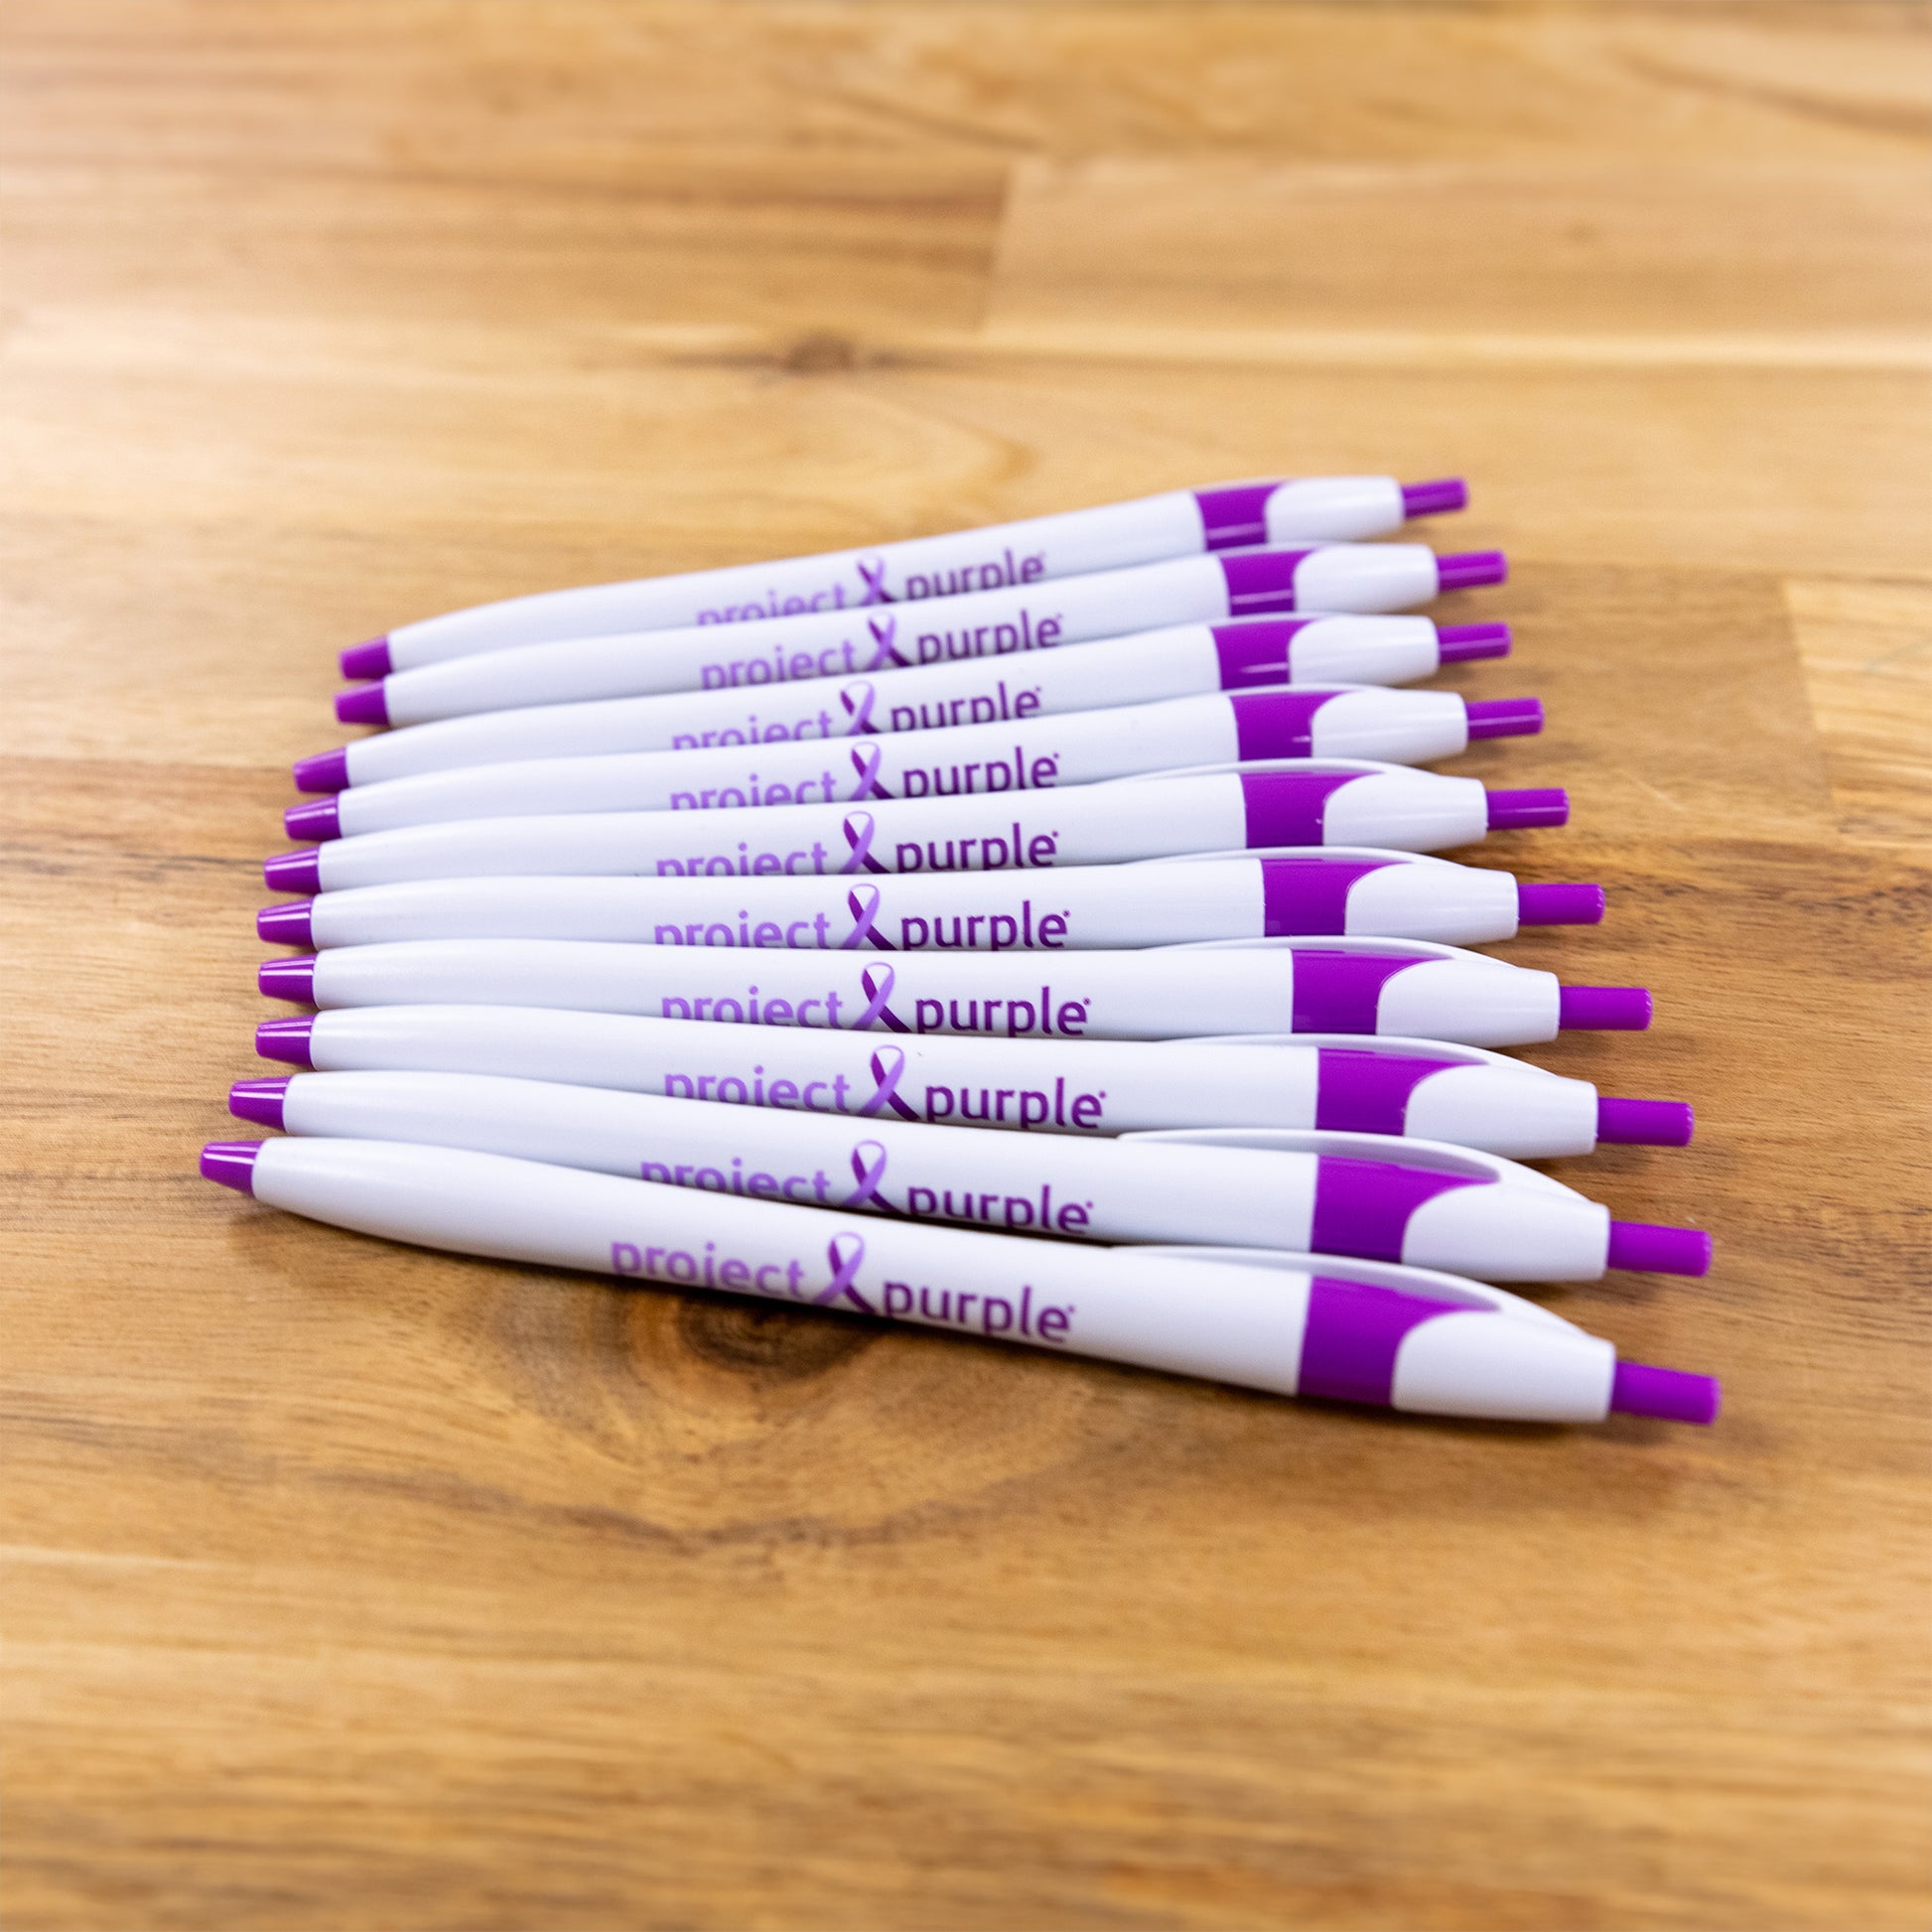 project purple pens on wood table